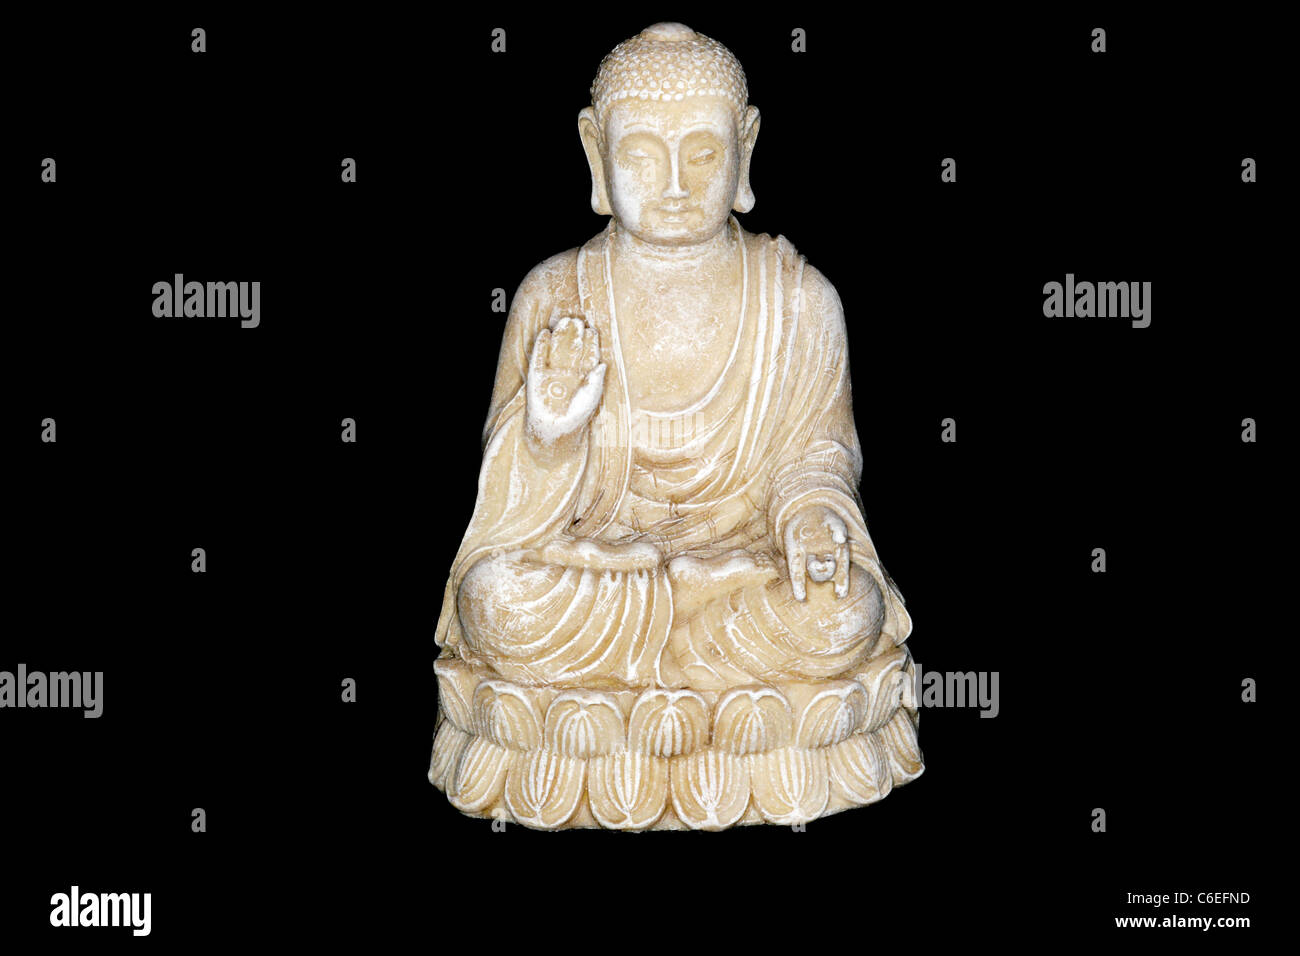 Statue of Buddha meditating on lotus flower against black background Stock Photo